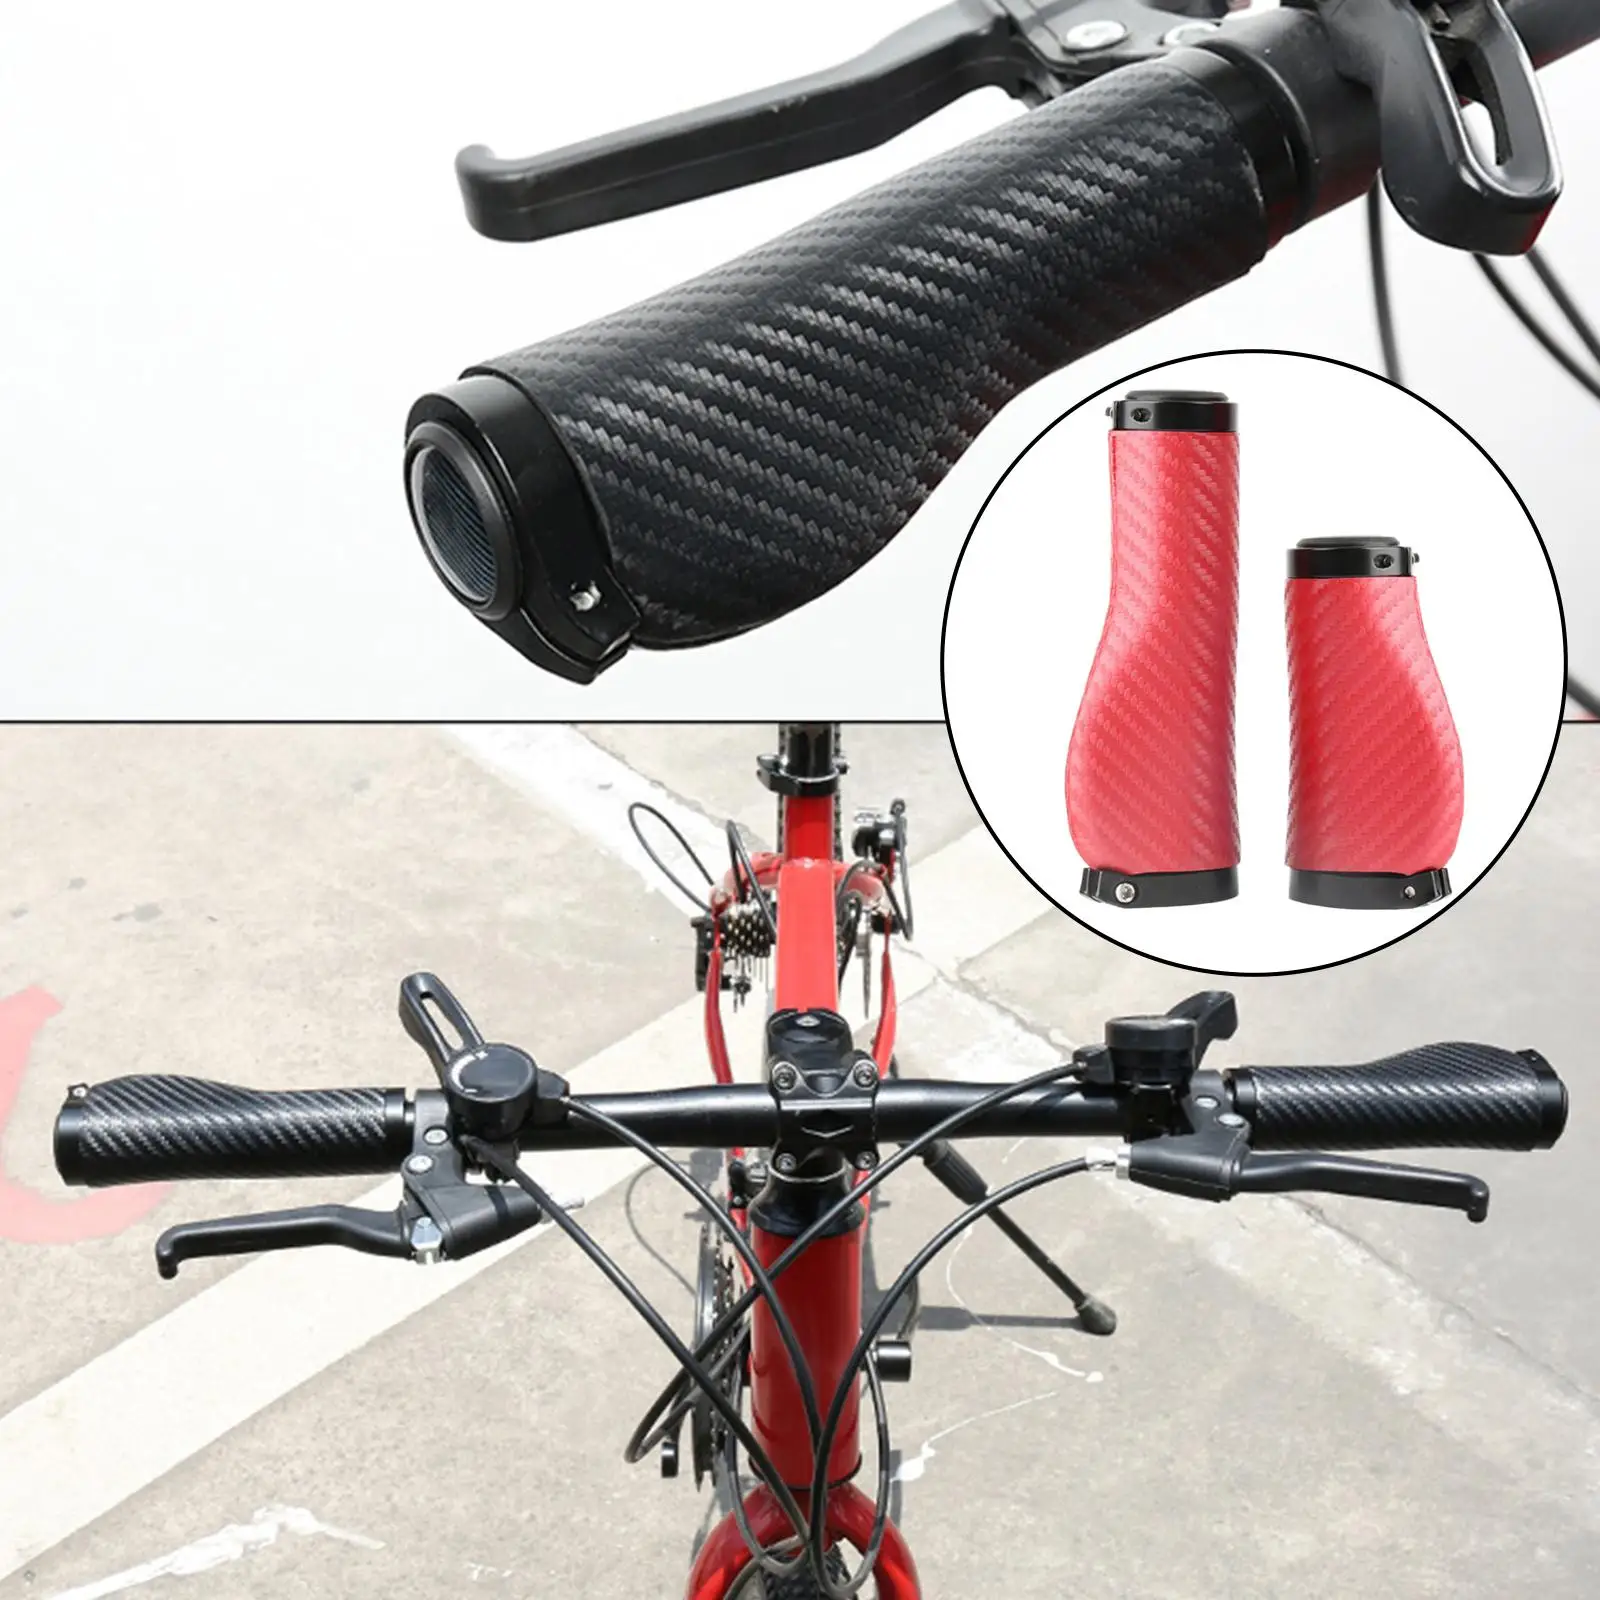 2x PU Plastic Bicycle Handlebar Grips   Ergonomic Bar Grips for Mountain